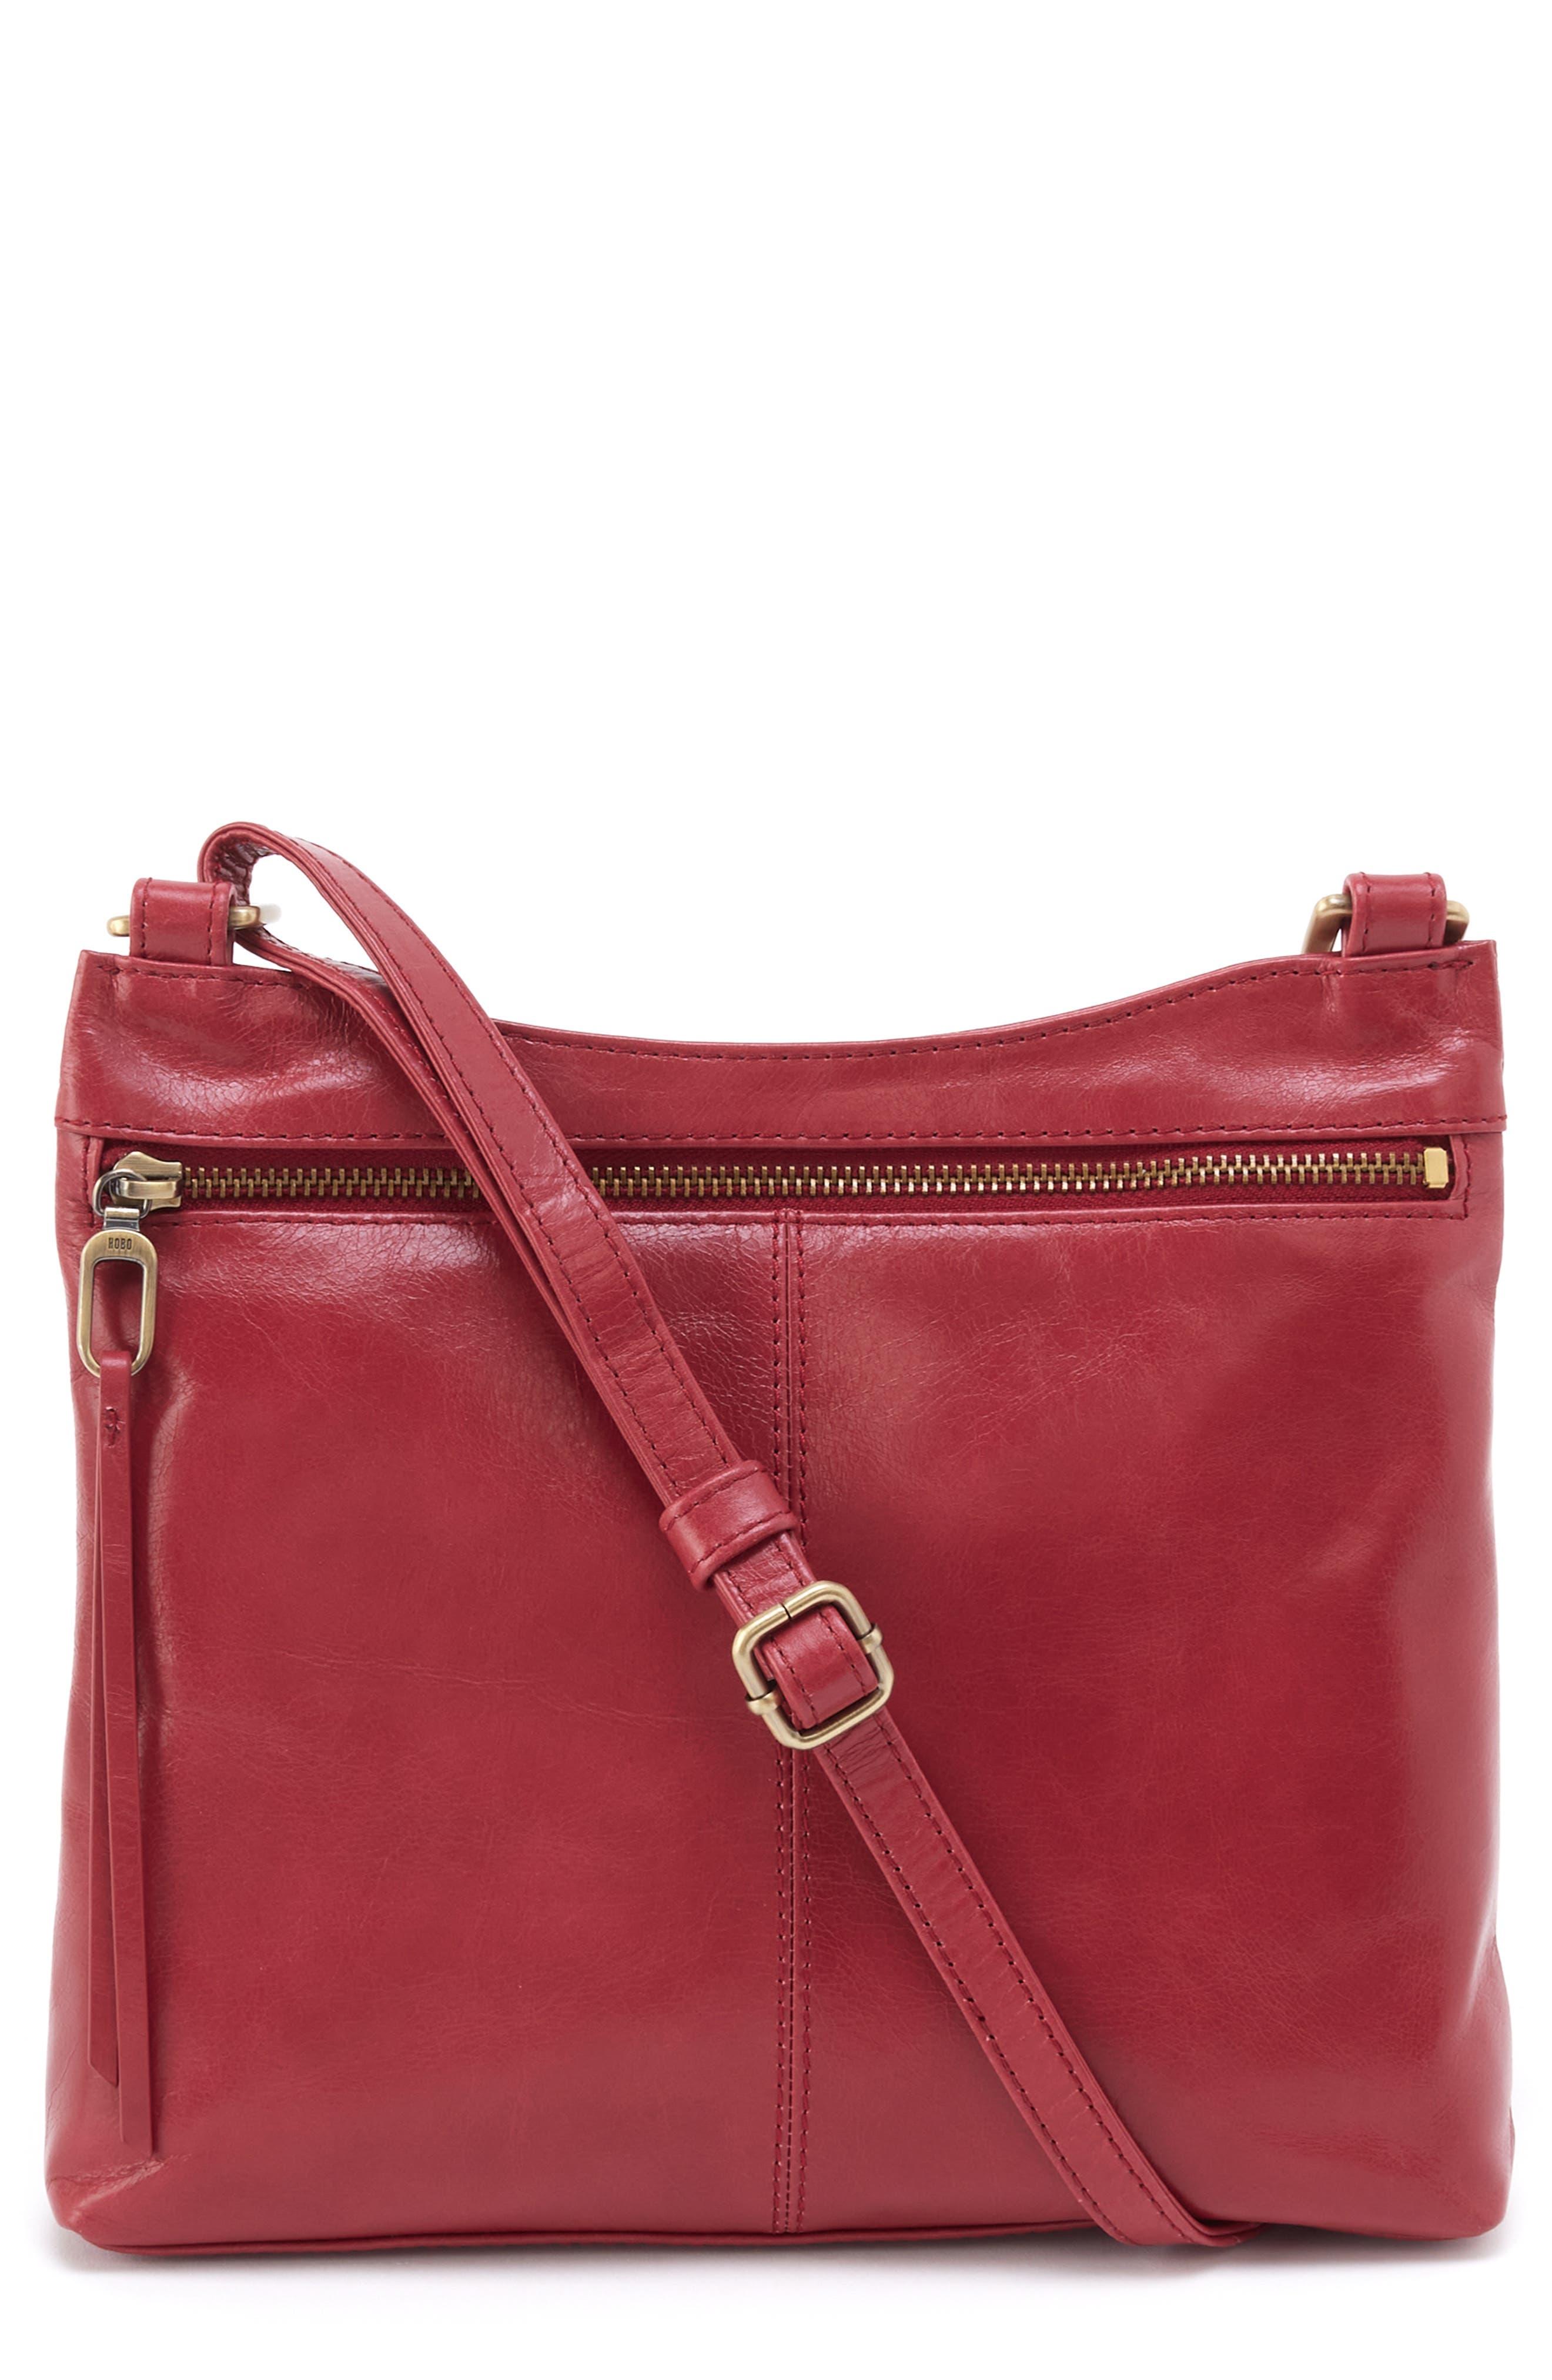 Hobo International Cambel Leather Crossbody Bag in Red